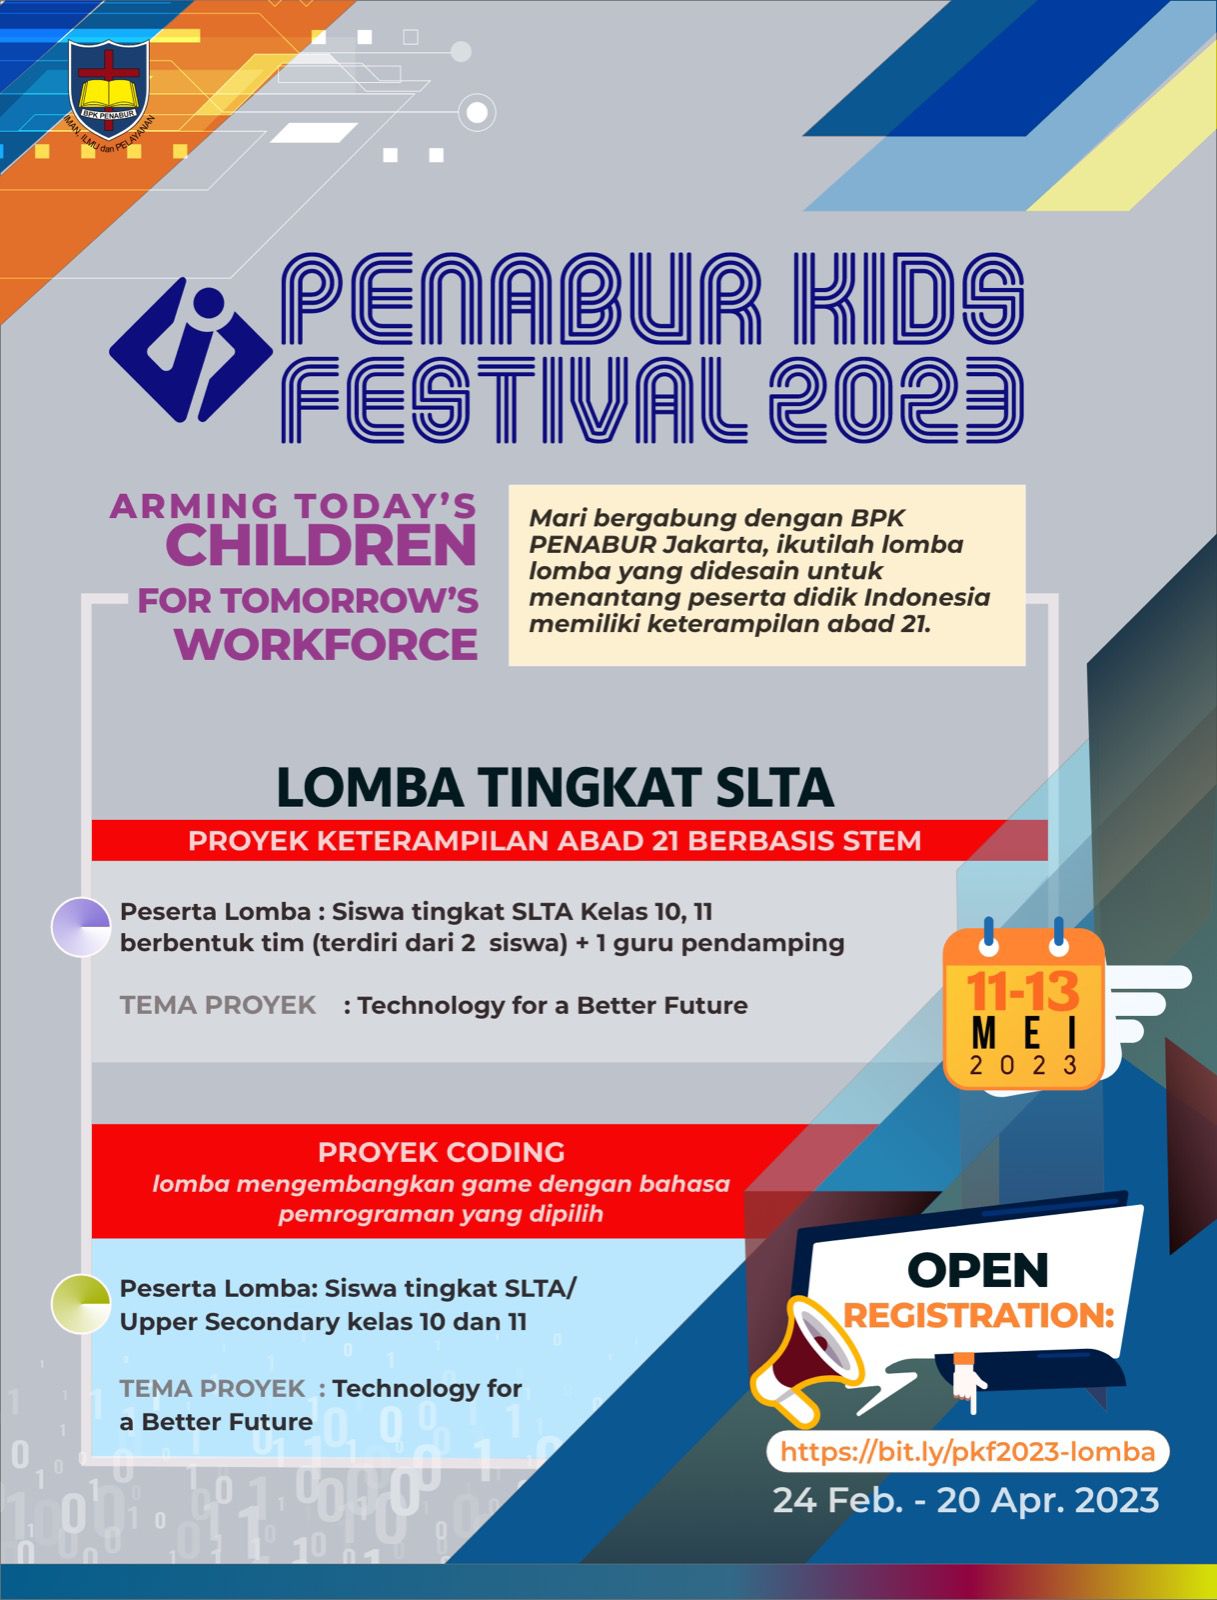 PENABUR Kids Festival 2023 "Arming Today's Children for Tomorrow's Workforce" Tingkat SLTA